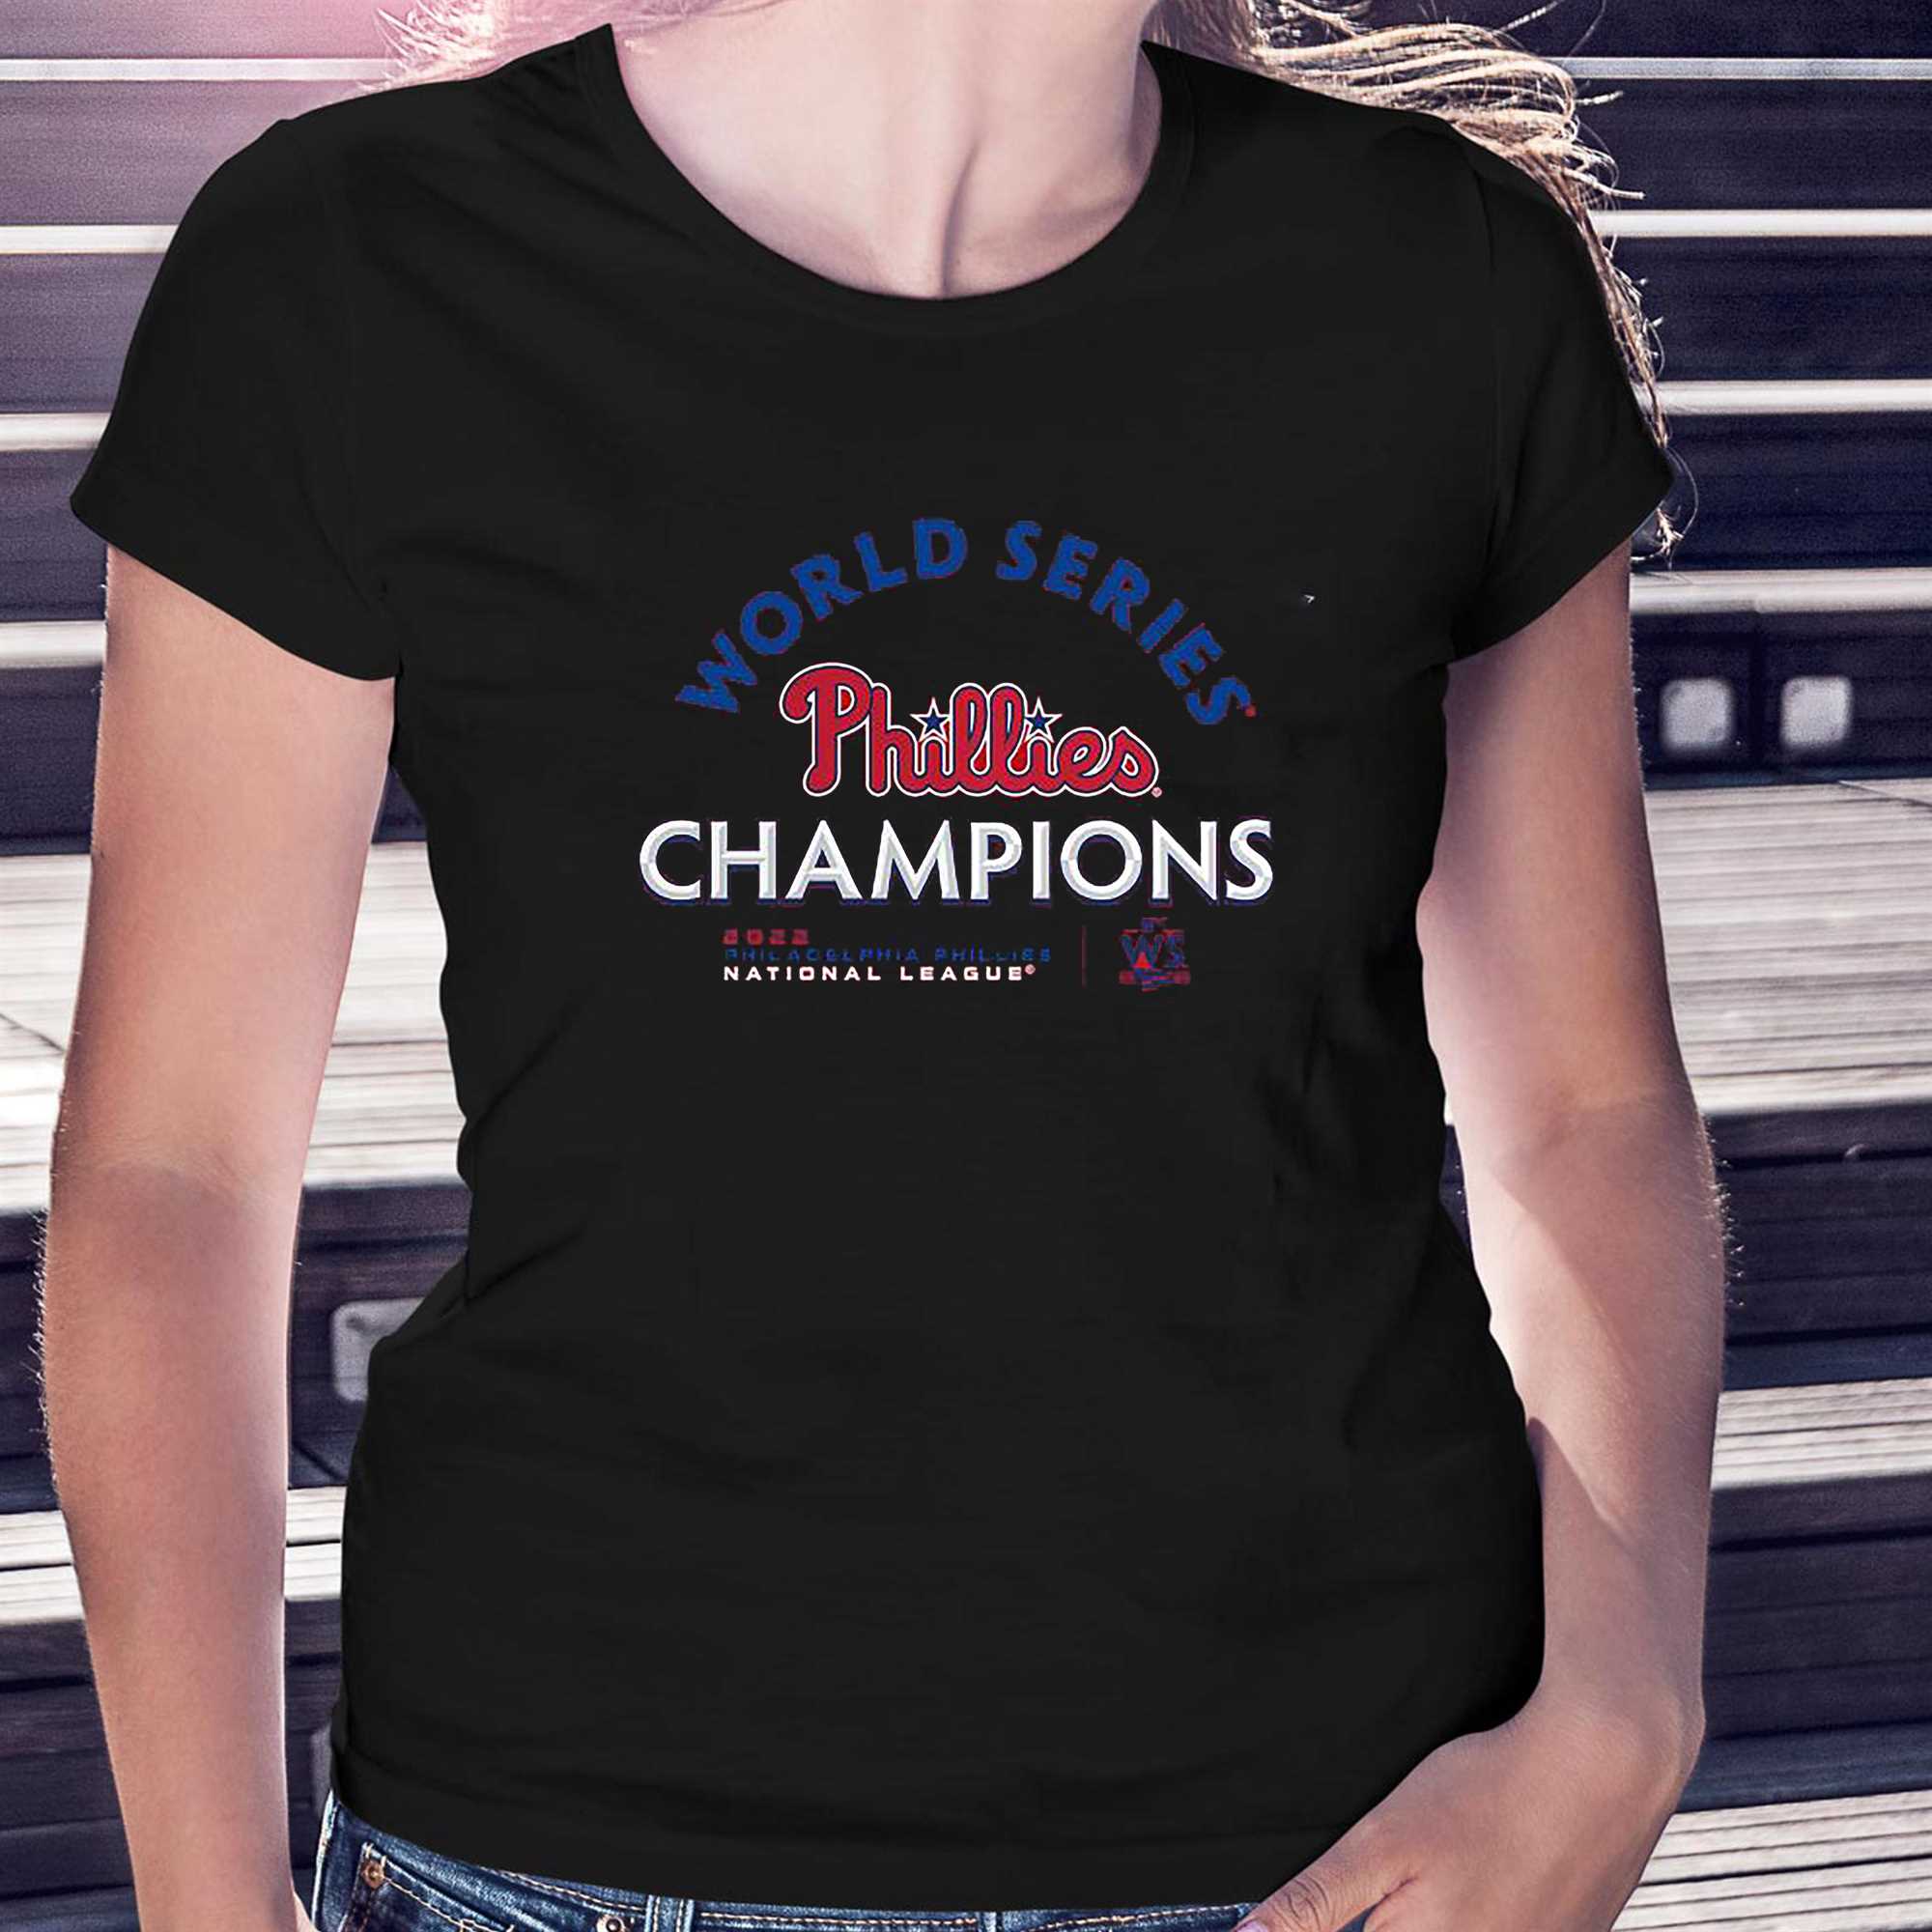 national league champions phillies shirt